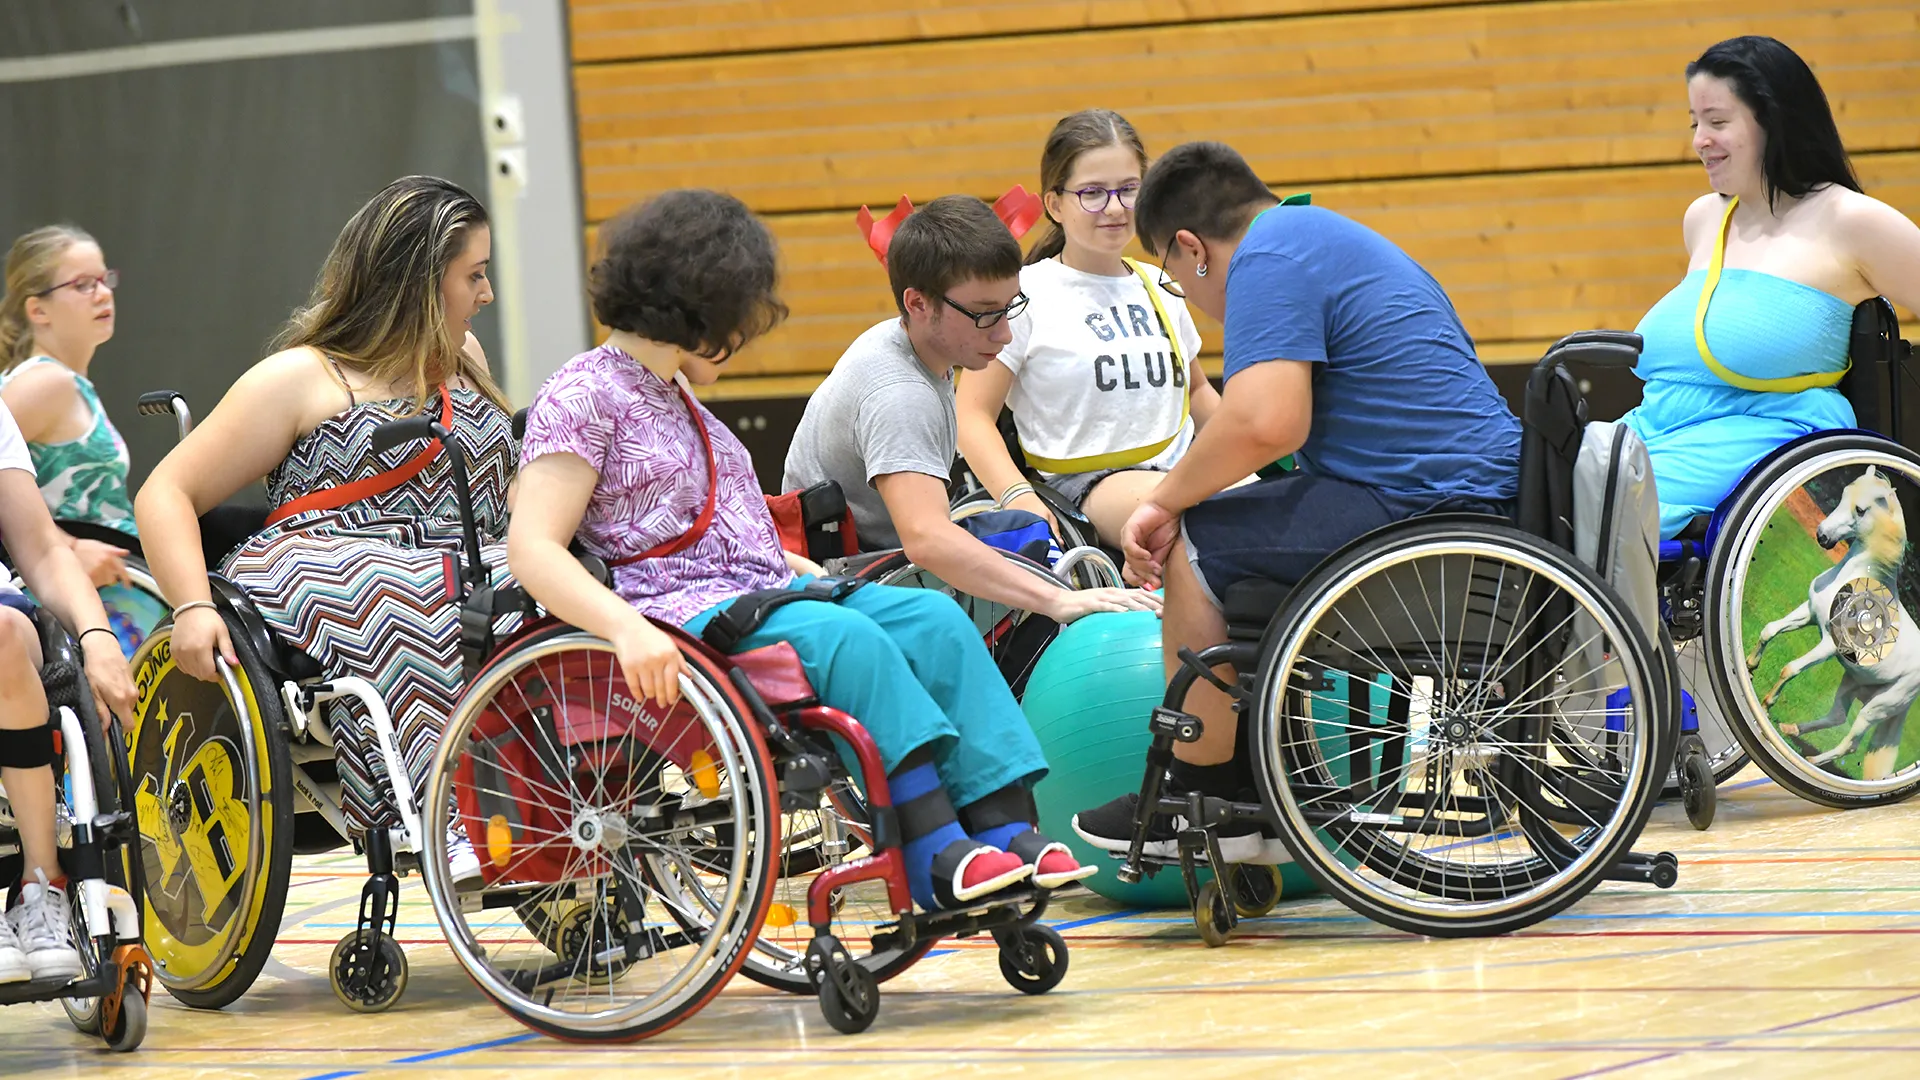 Sport während der Jugendrehawoche 2019 am Schweizer Paraplegiker-Zentrum